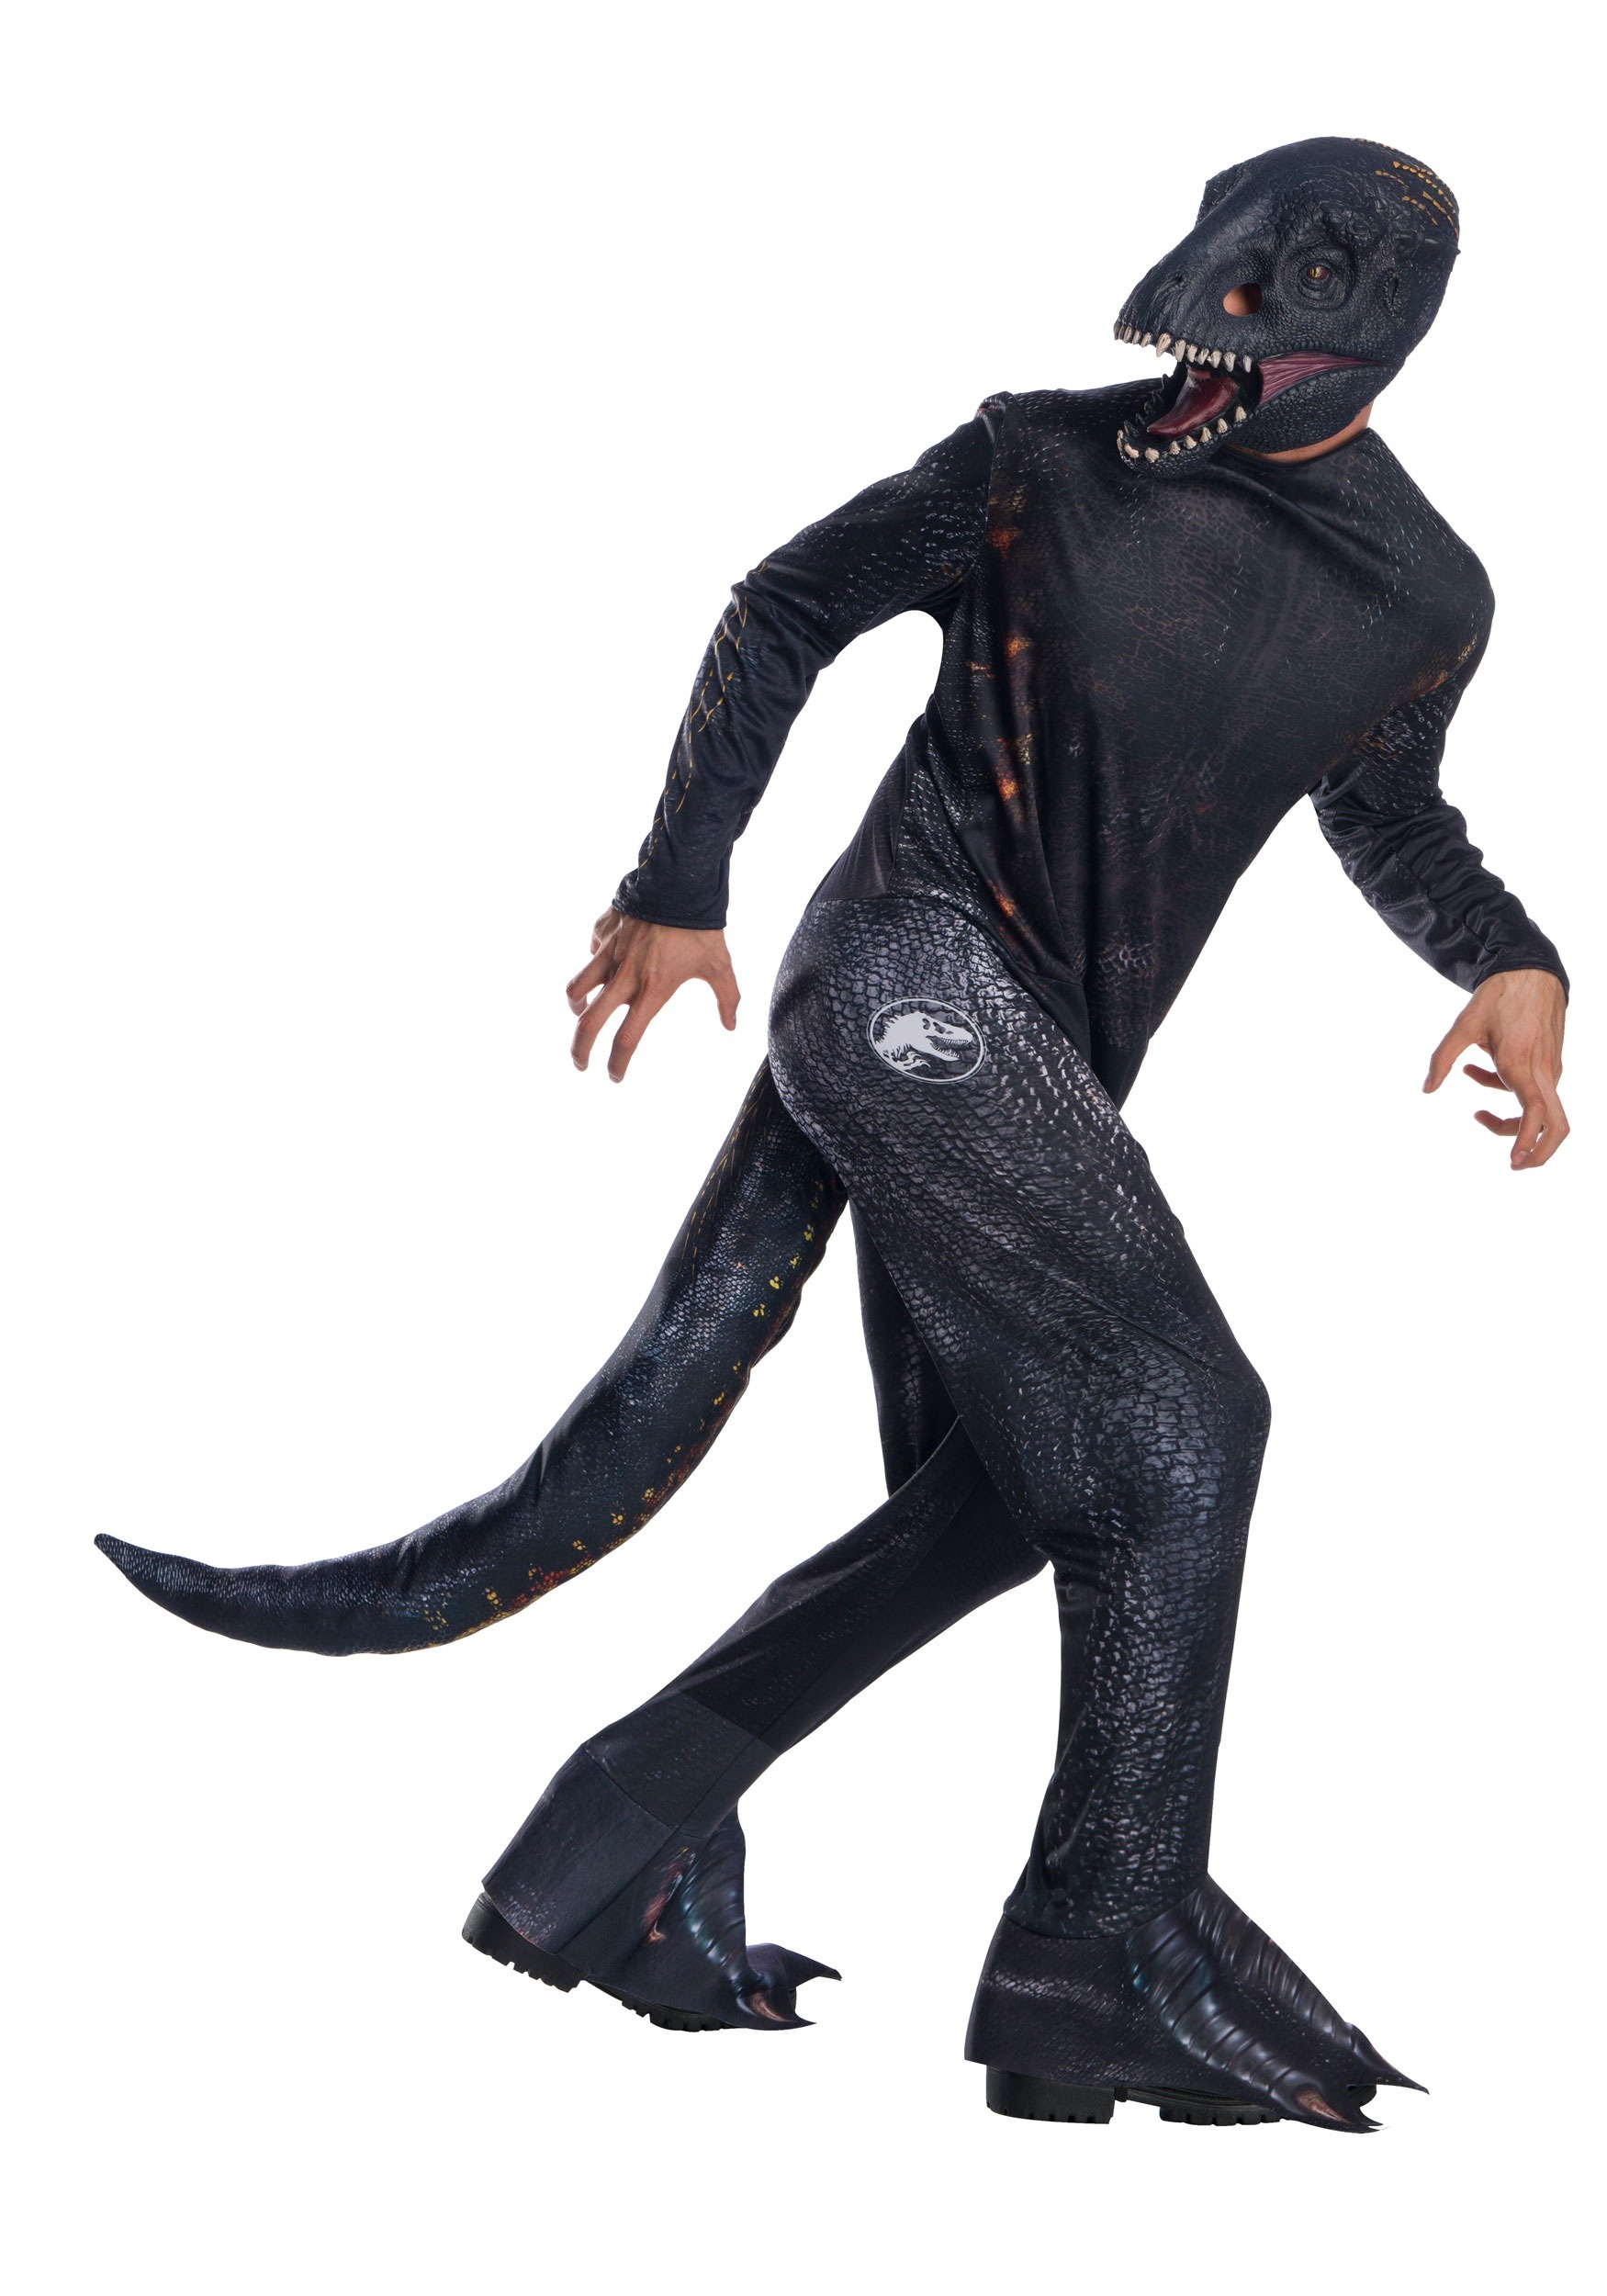 Men and Women's Jurassic World 2 Villain Dinosaur Costume